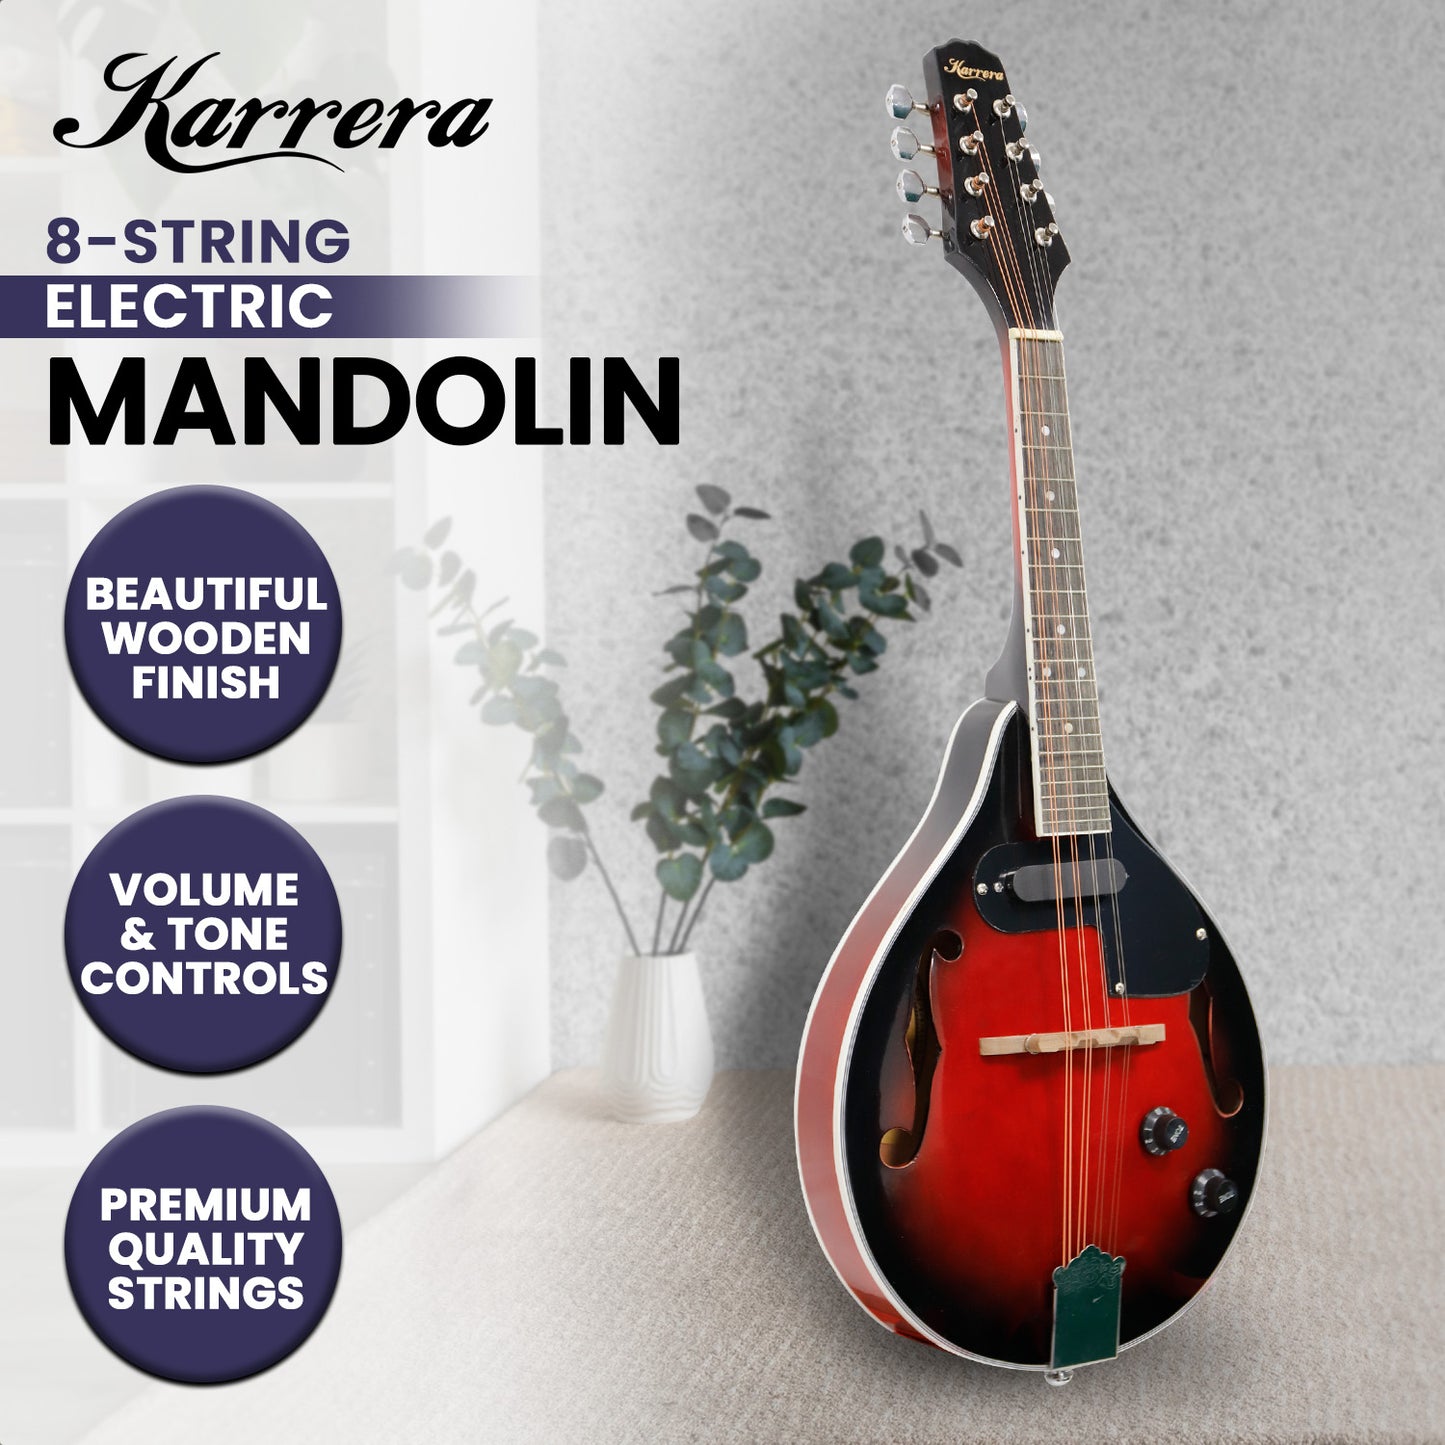 Karrera 8-String Electric Mandolin